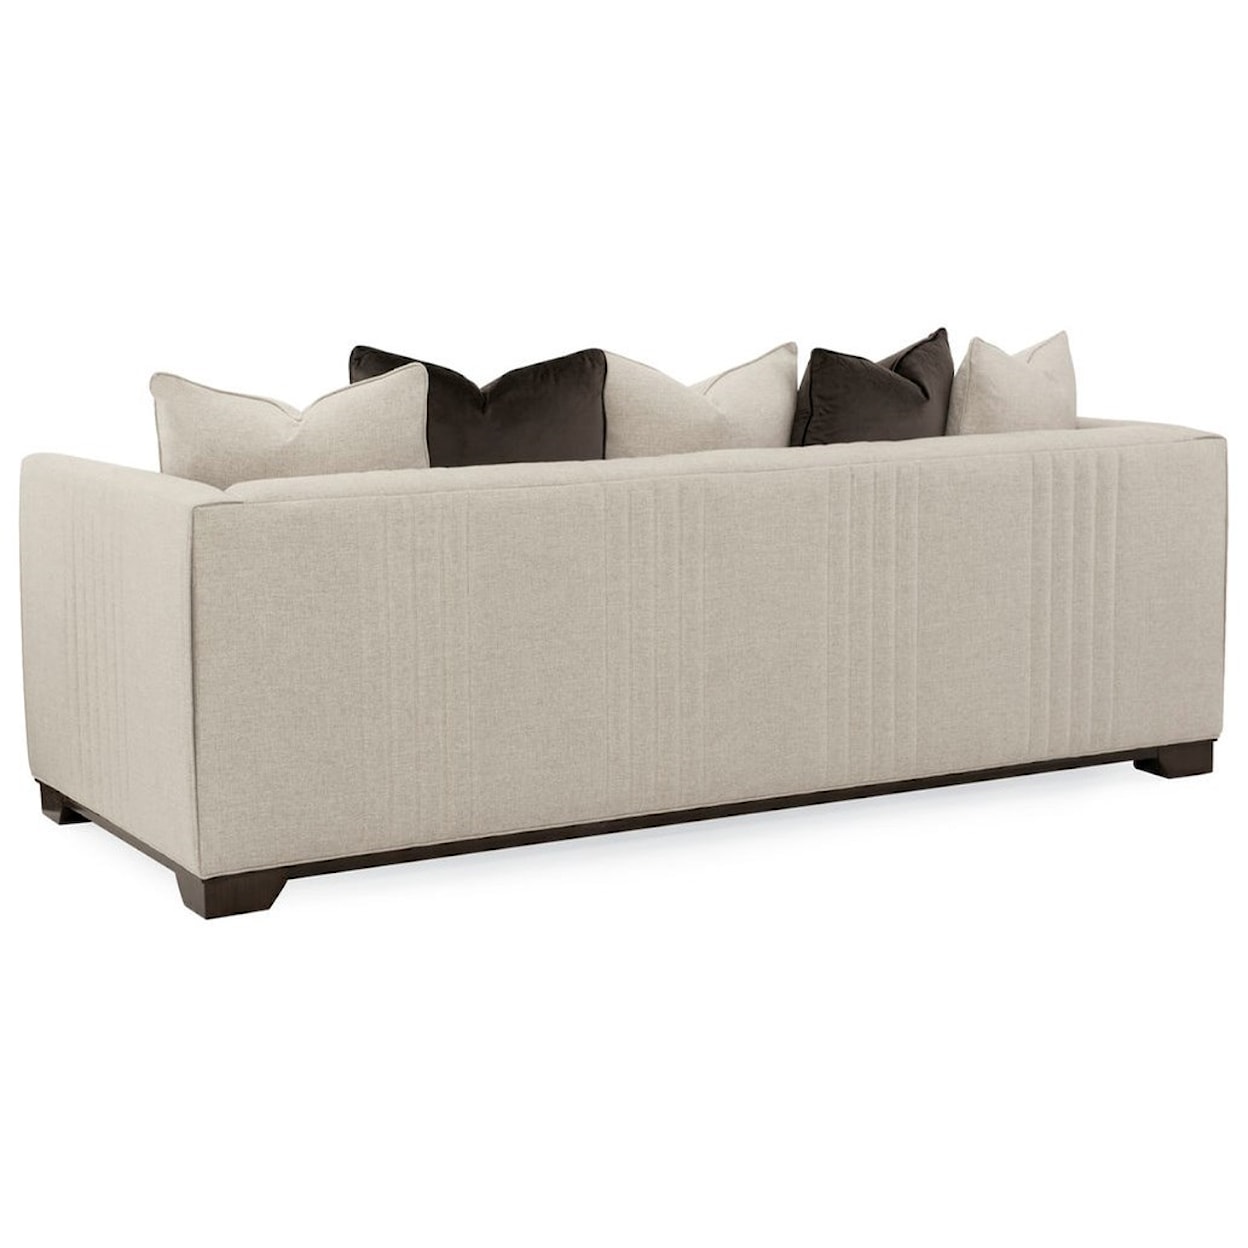 Caracole Caracole Upholstery Moderne Sofa